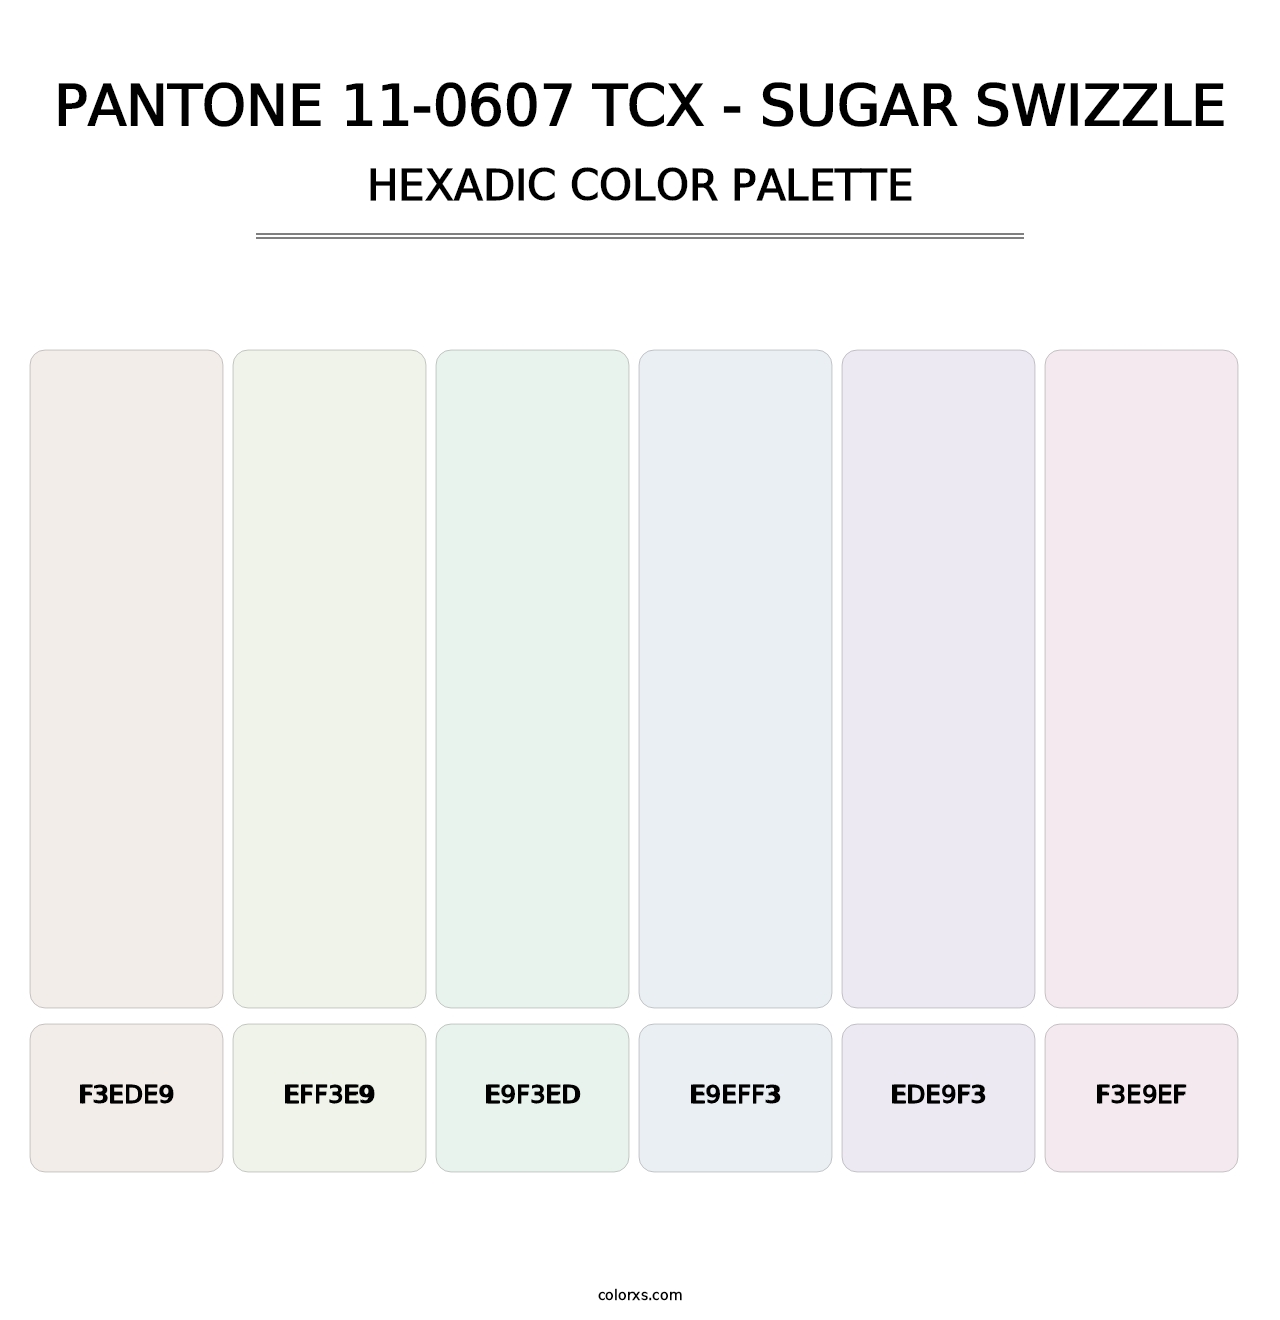 PANTONE 11-0607 TCX - Sugar Swizzle - Hexadic Color Palette